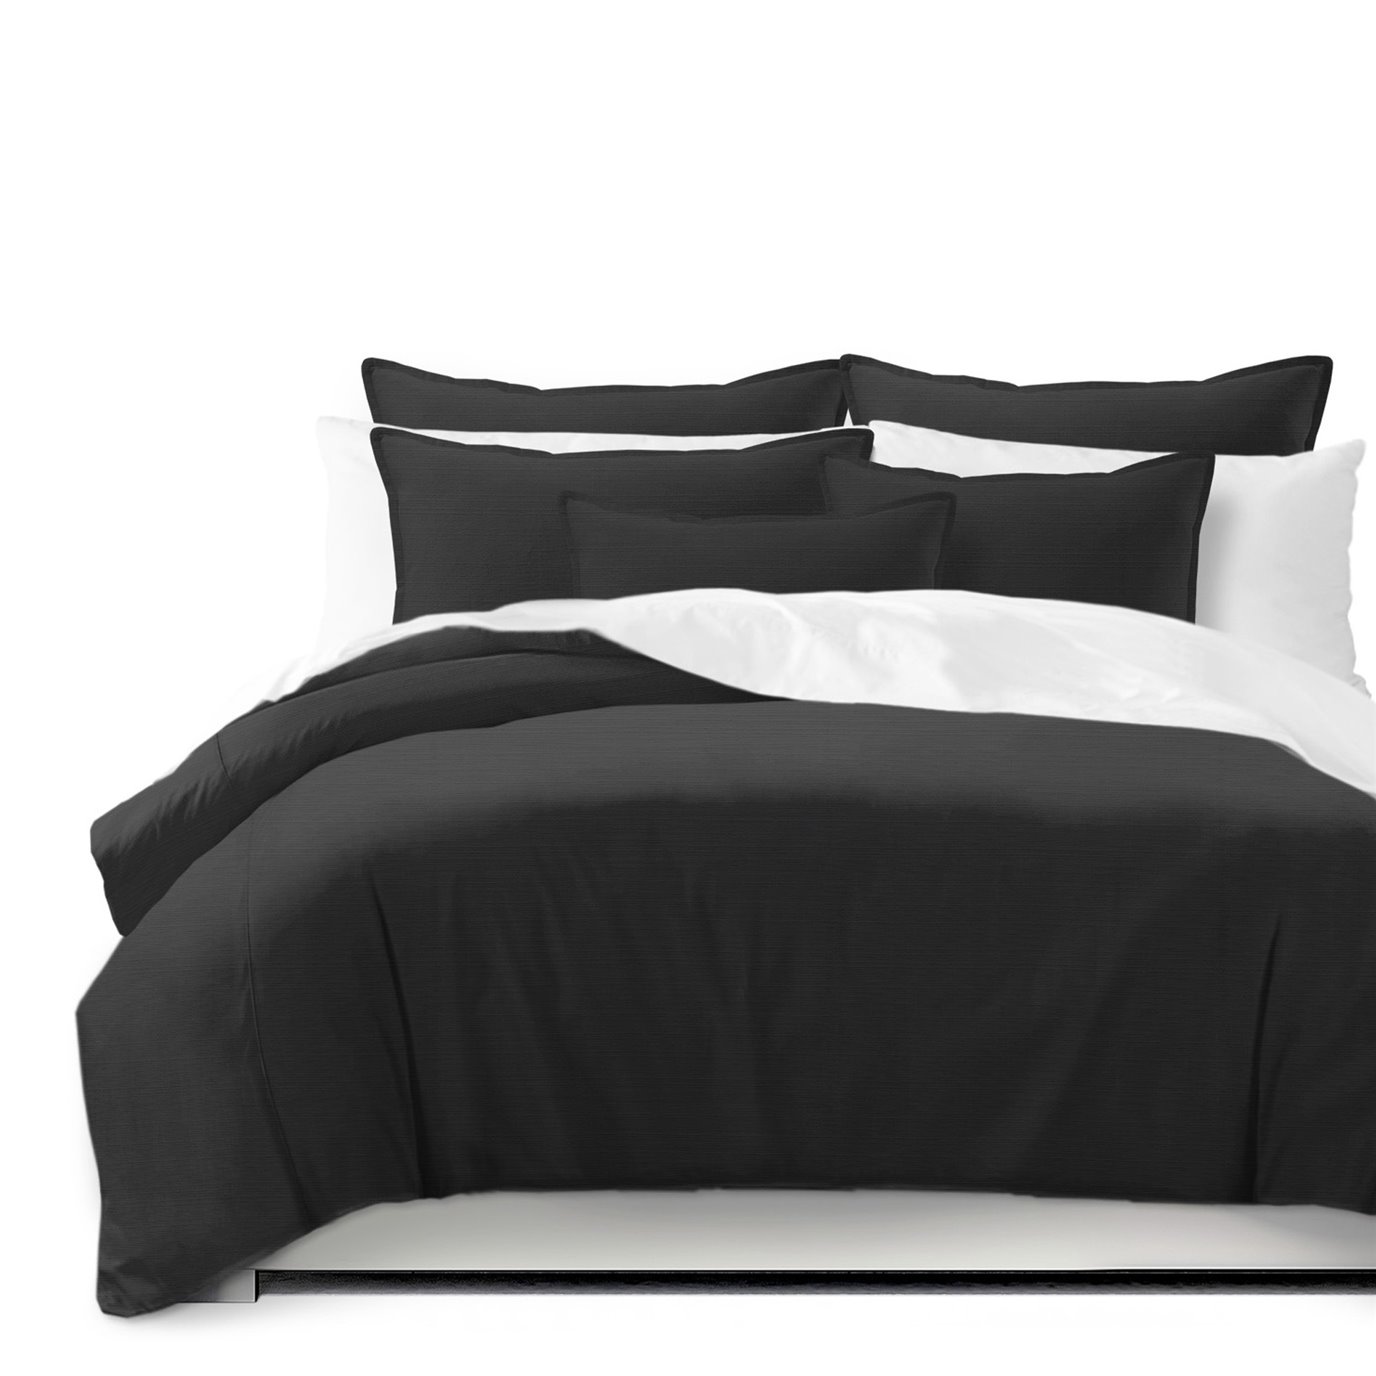 Nova Black Comforter and Pillow Sham(s) Set - Size Super Queen